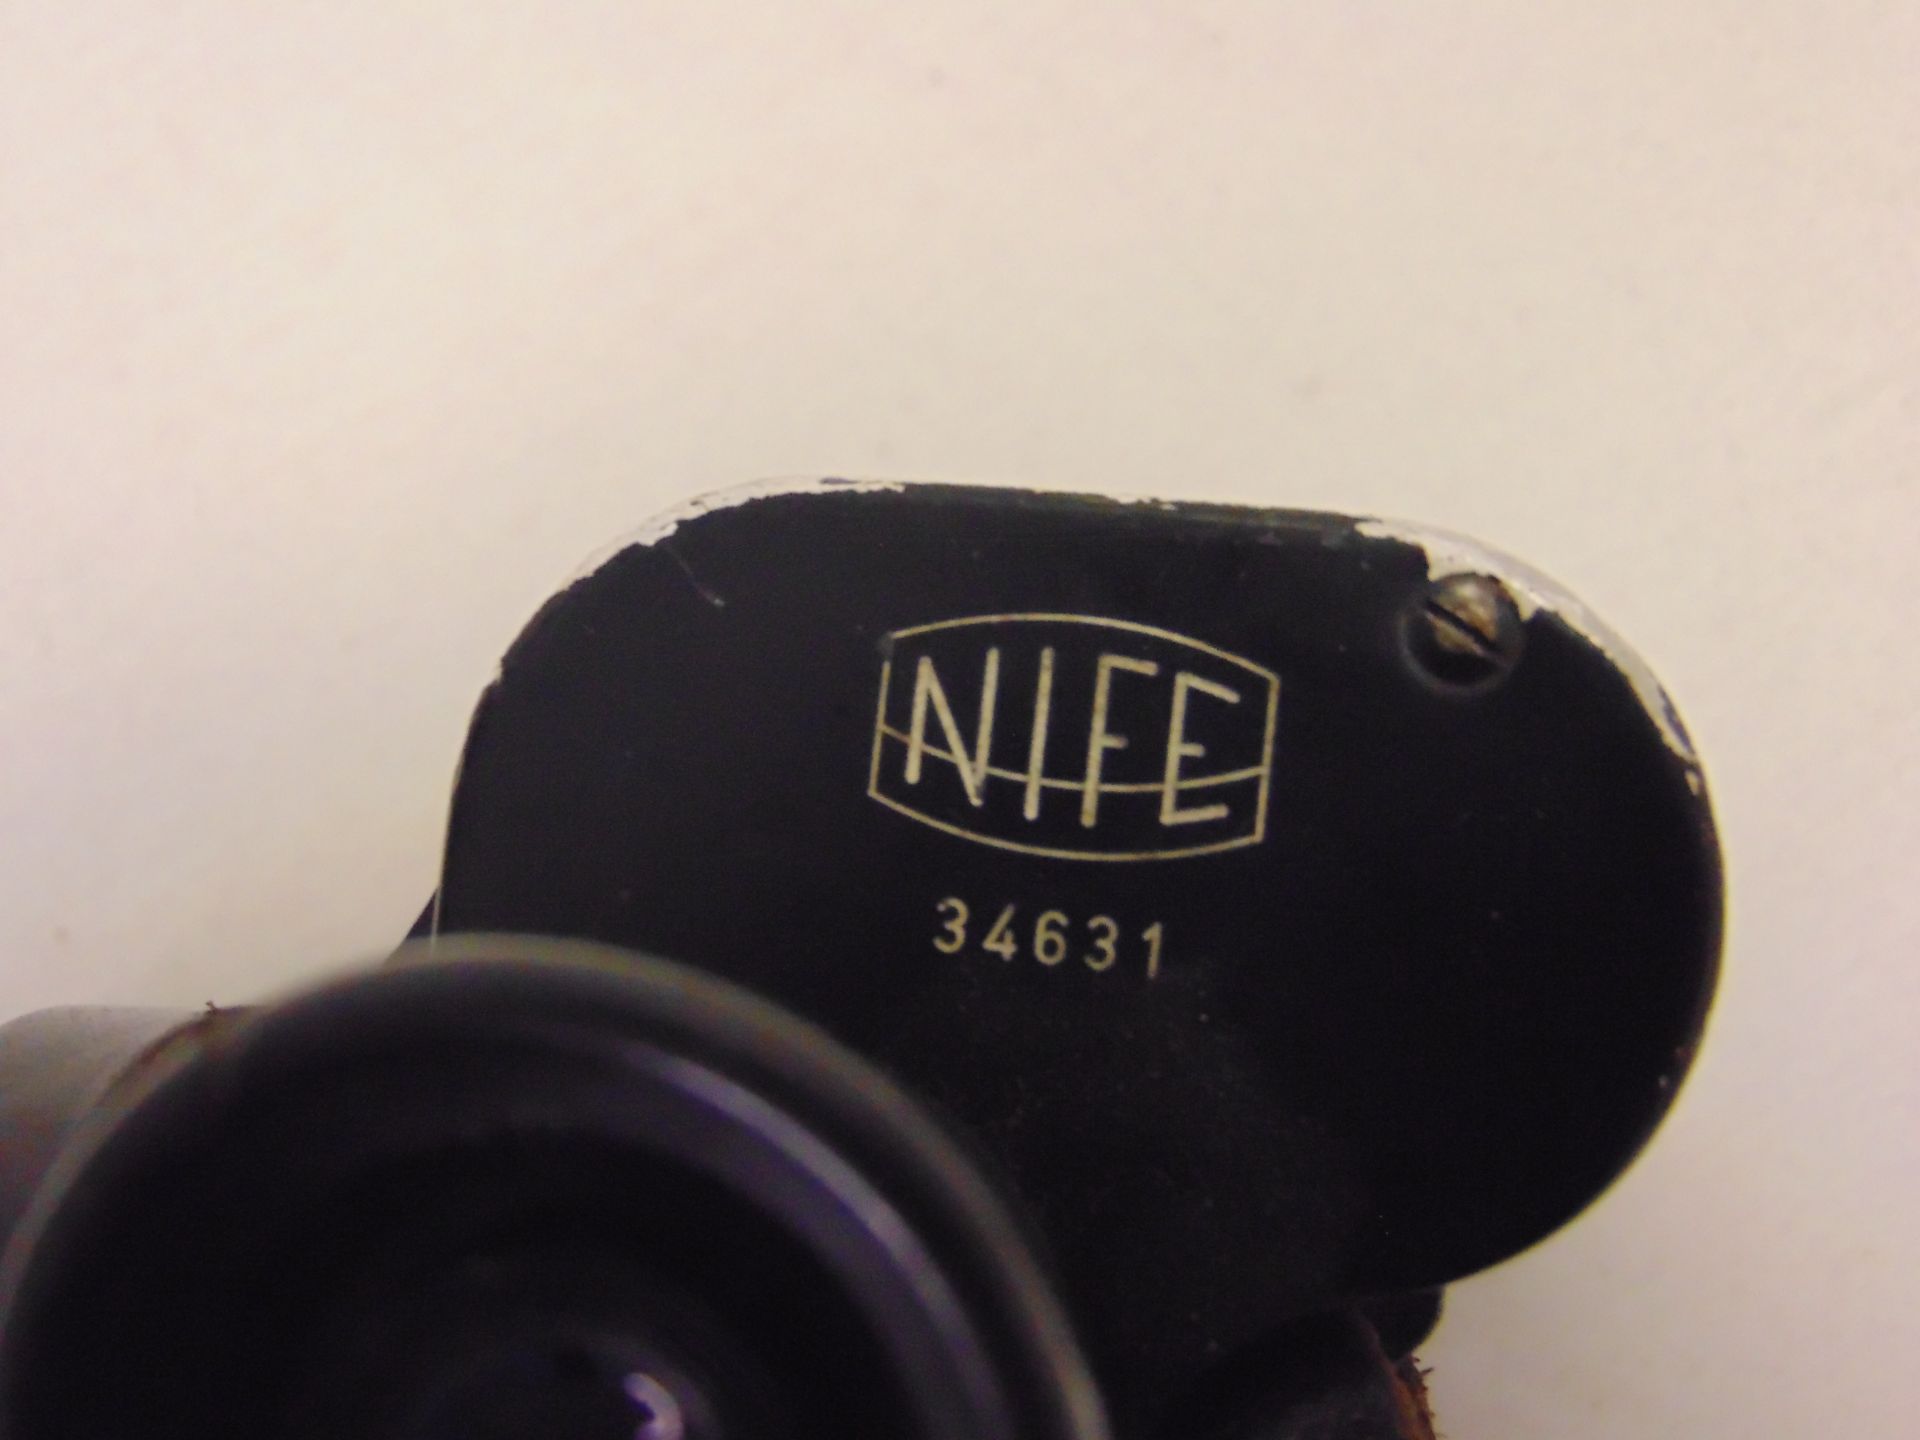 Nice Original Pair of NIFE 6 x 30 Binoculars in Original Leather Case - Image 10 of 11